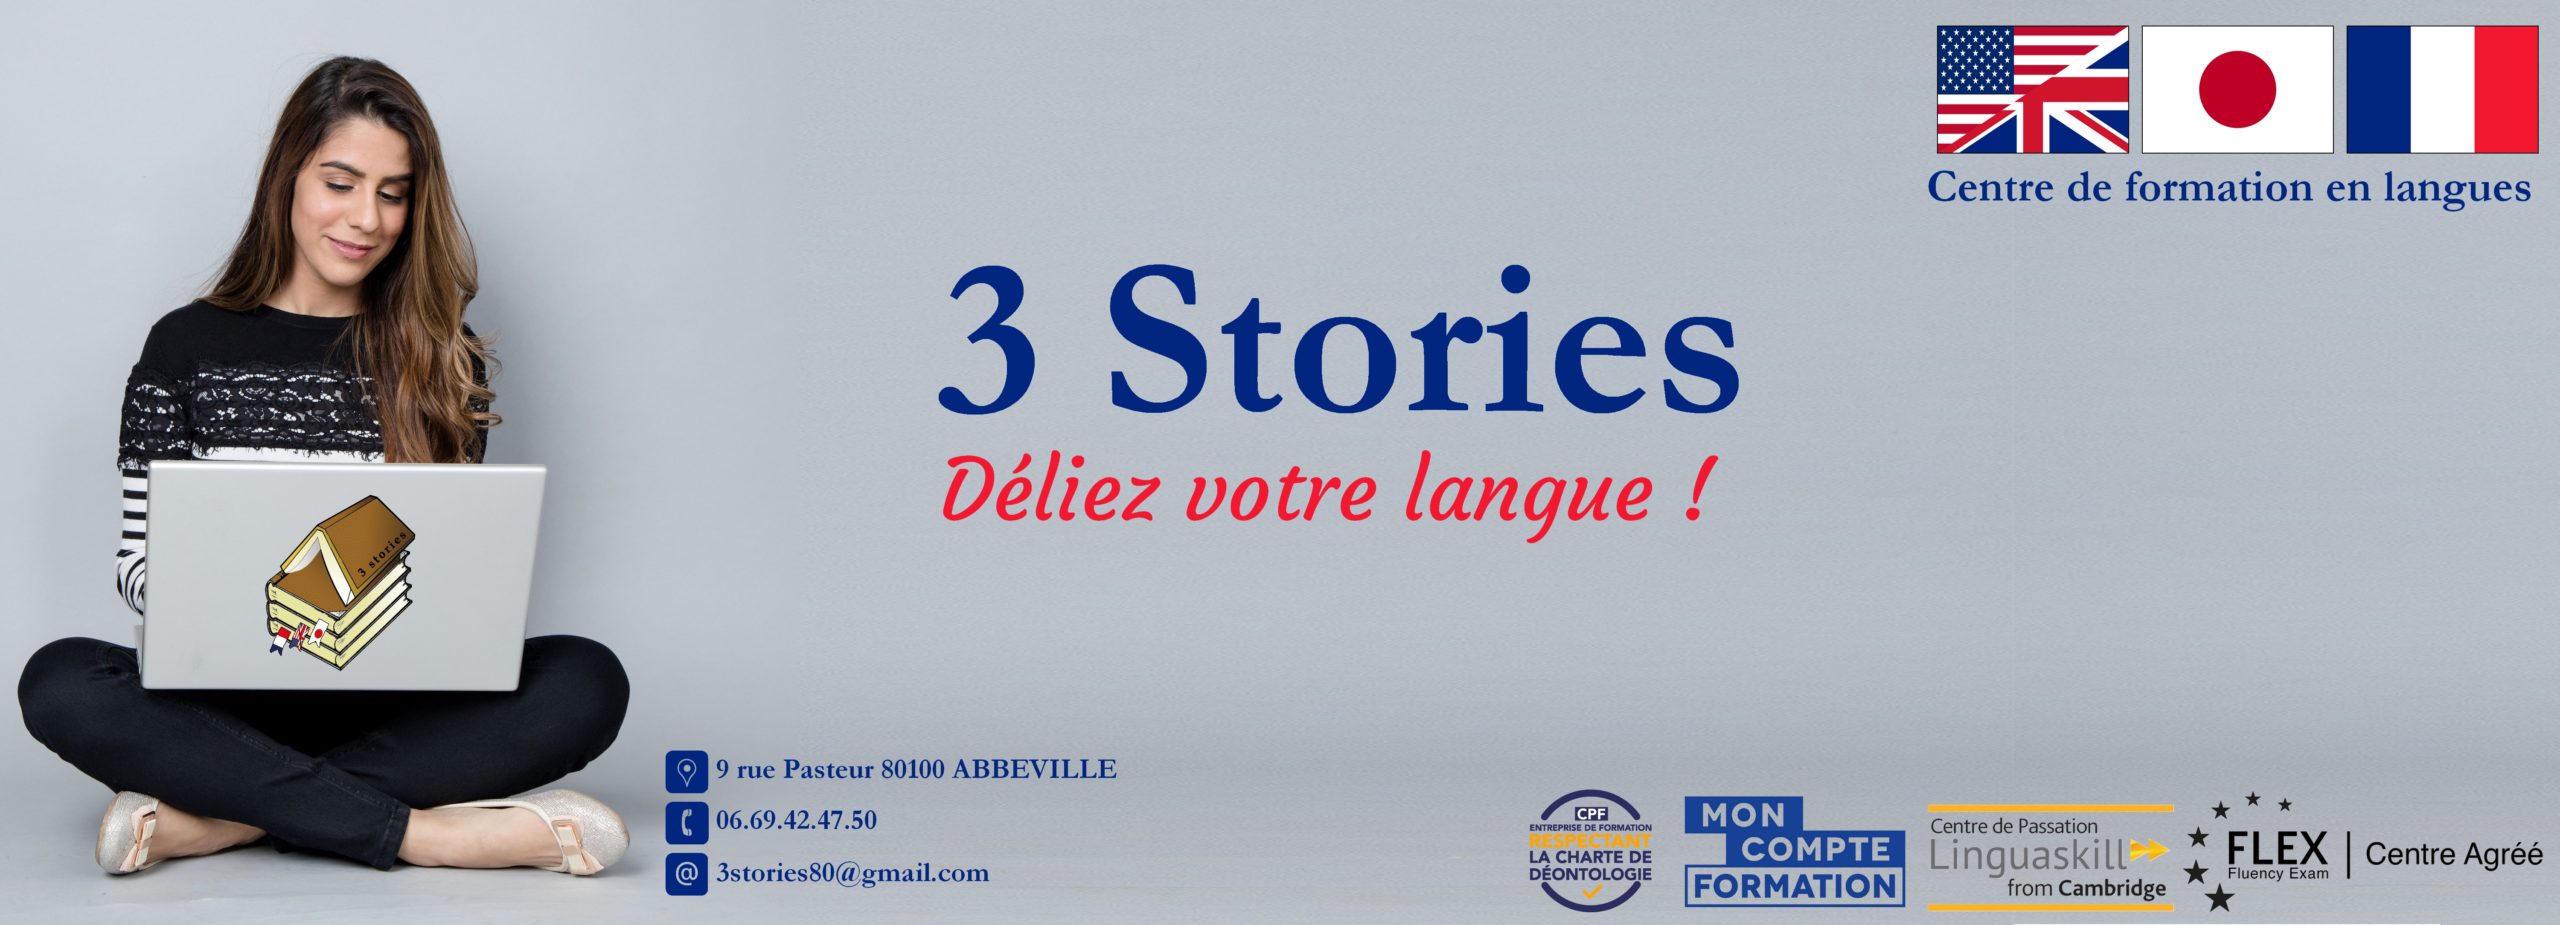 3 Stories